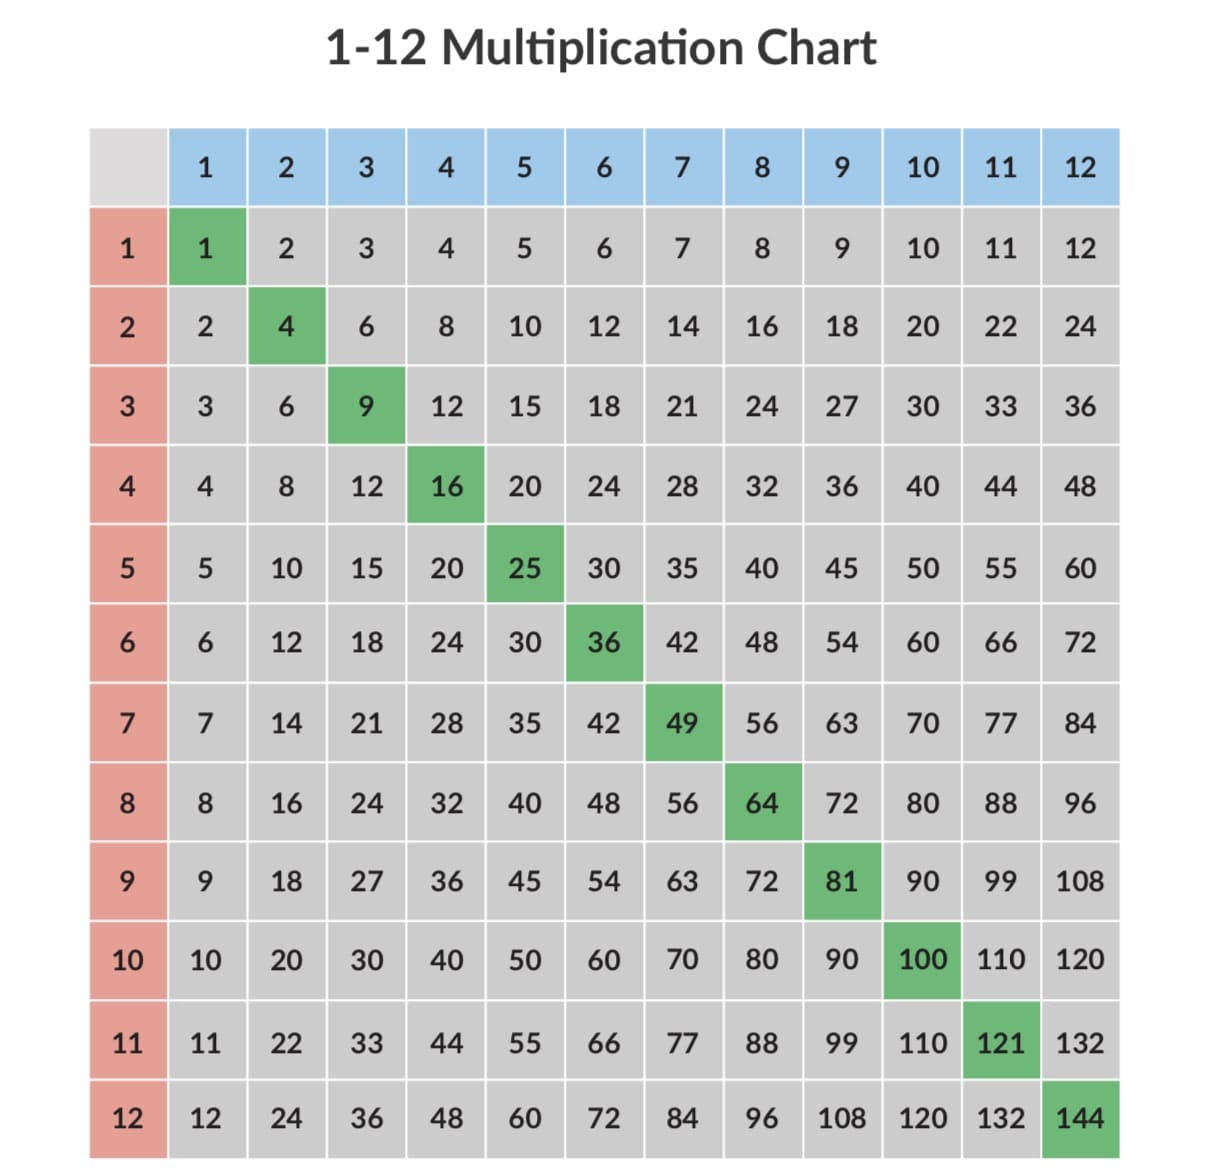 Prodigy's Multiplication Charts: 1-12 & 1-100